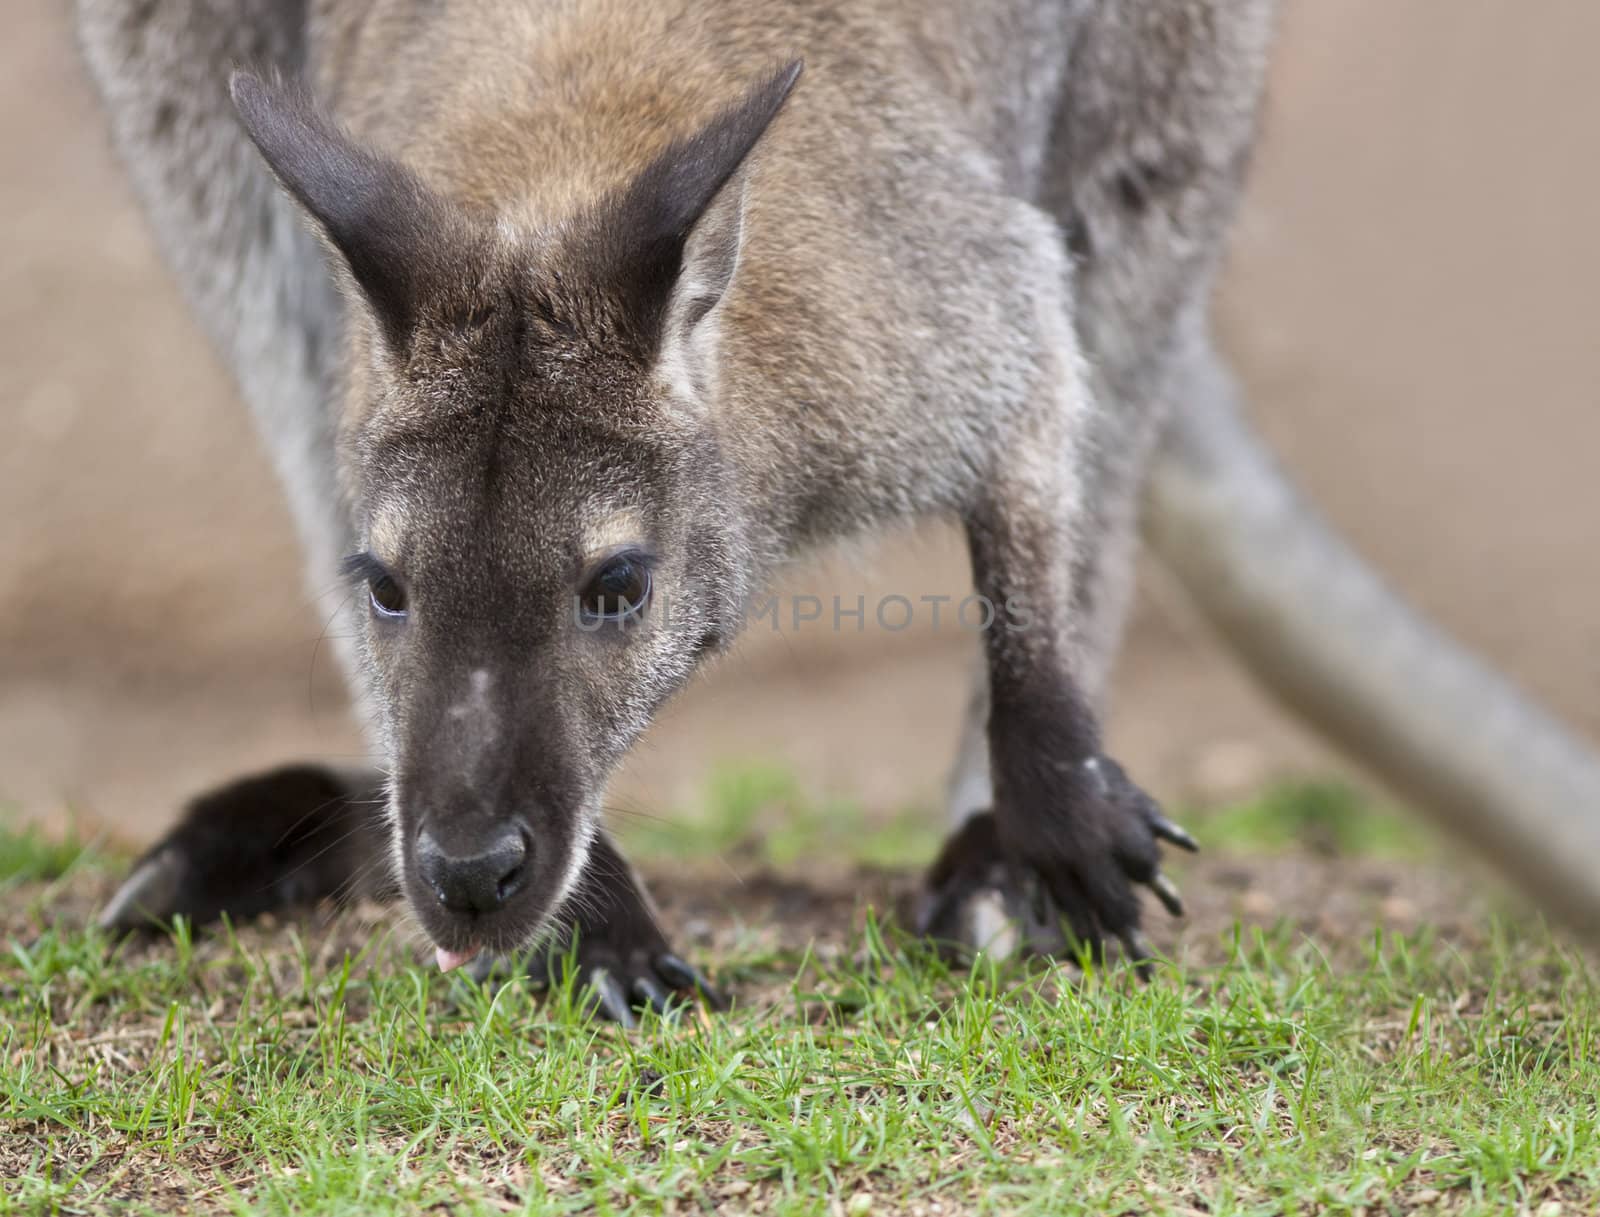 A close up shot of a Wallaby